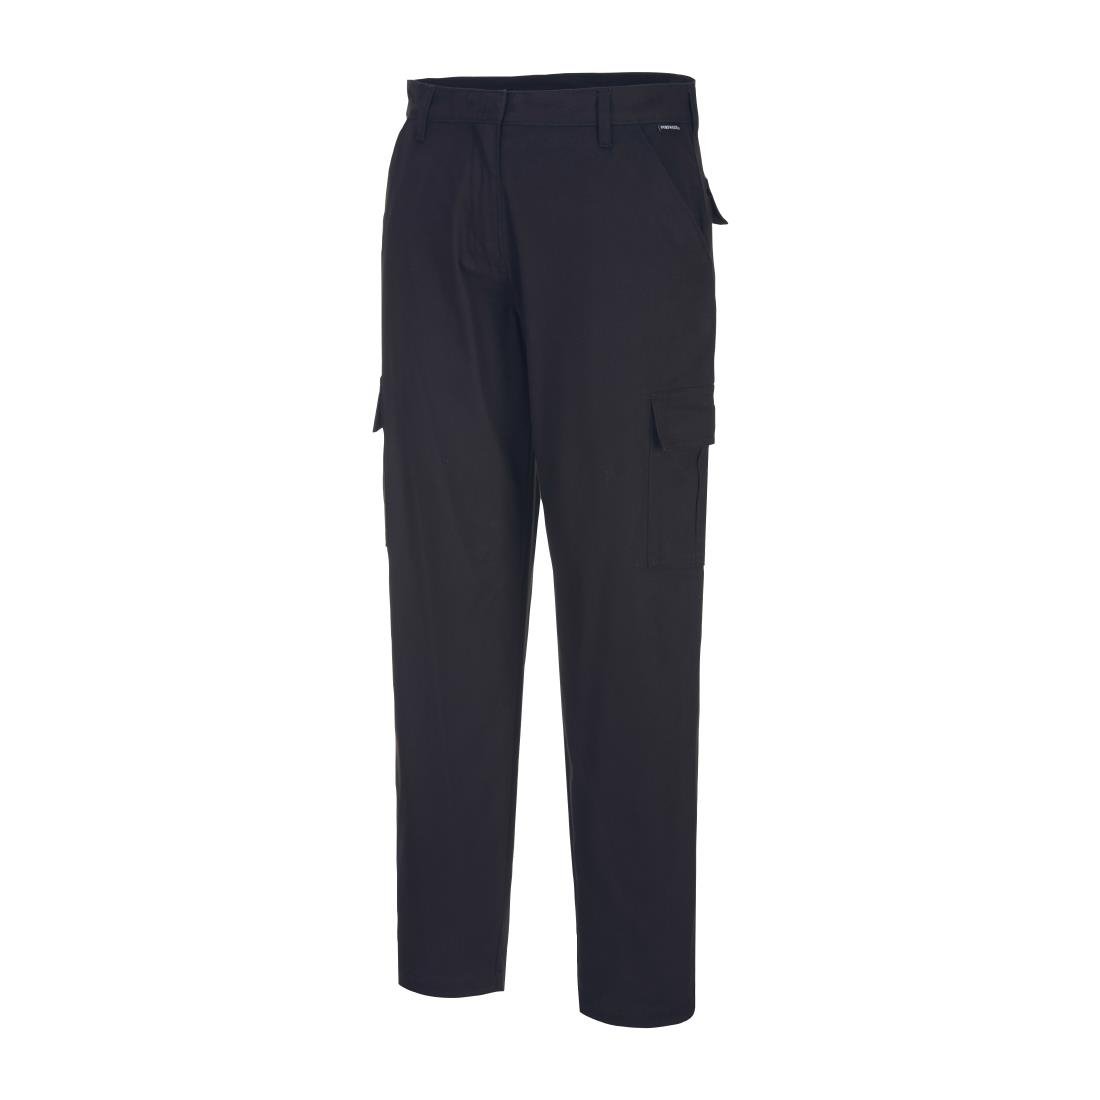 BA088-14 Portwest Eco Women's Stretch Cargo Trousers Black Size 14